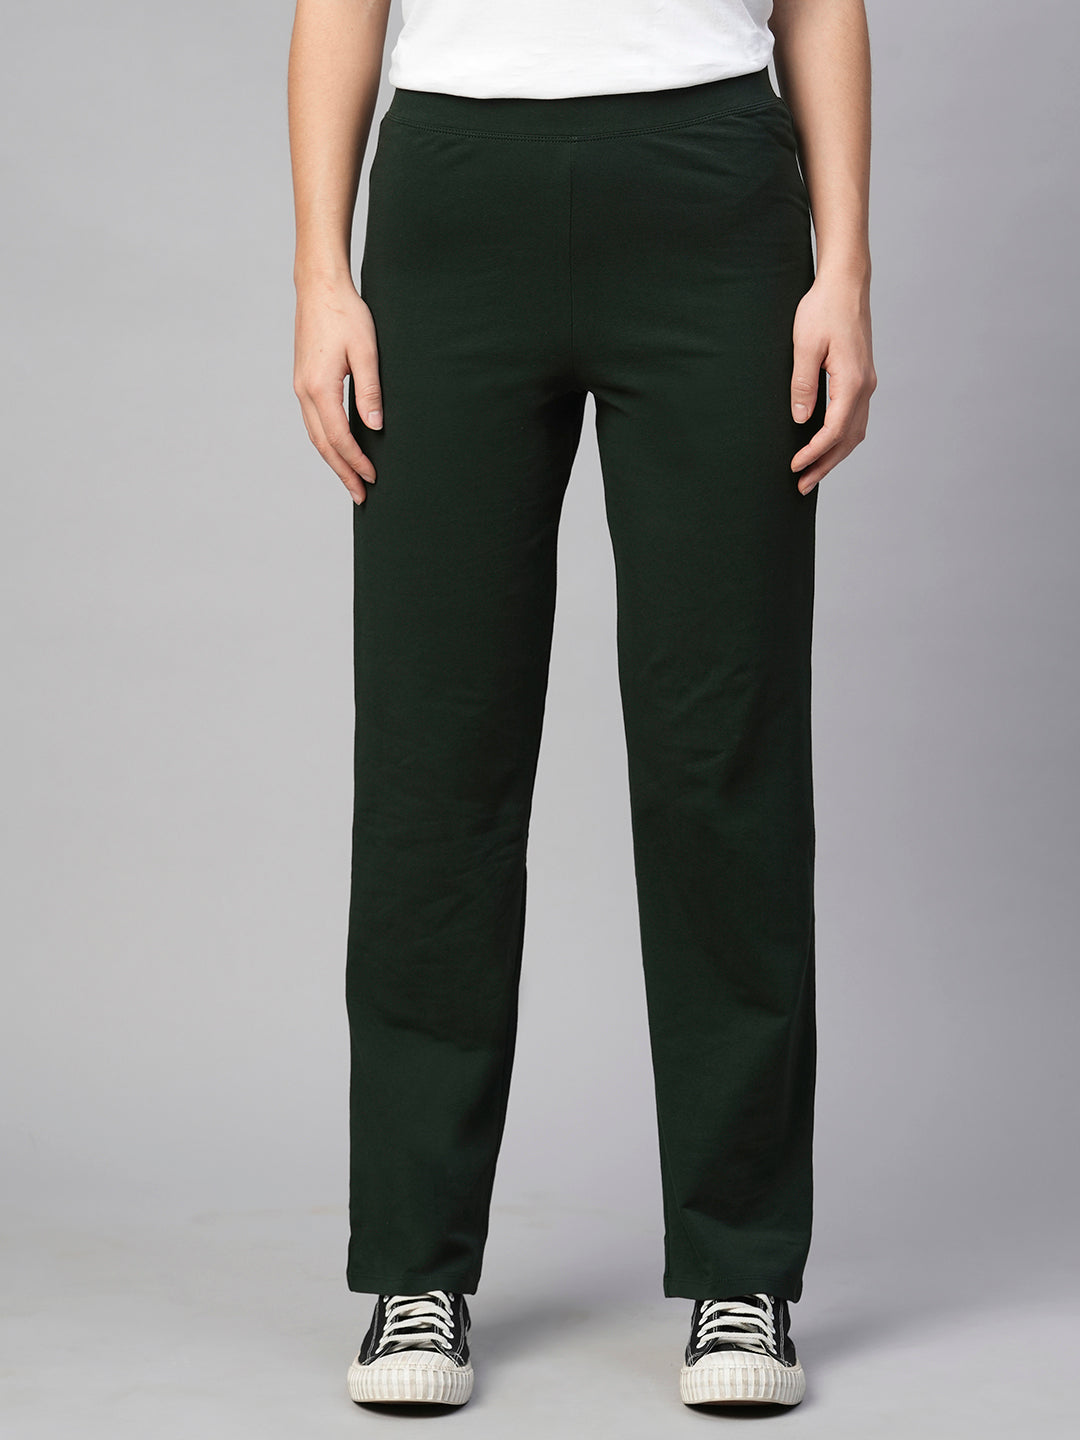 Women's Green Cotton Elastane Regular Fit Knit Pant